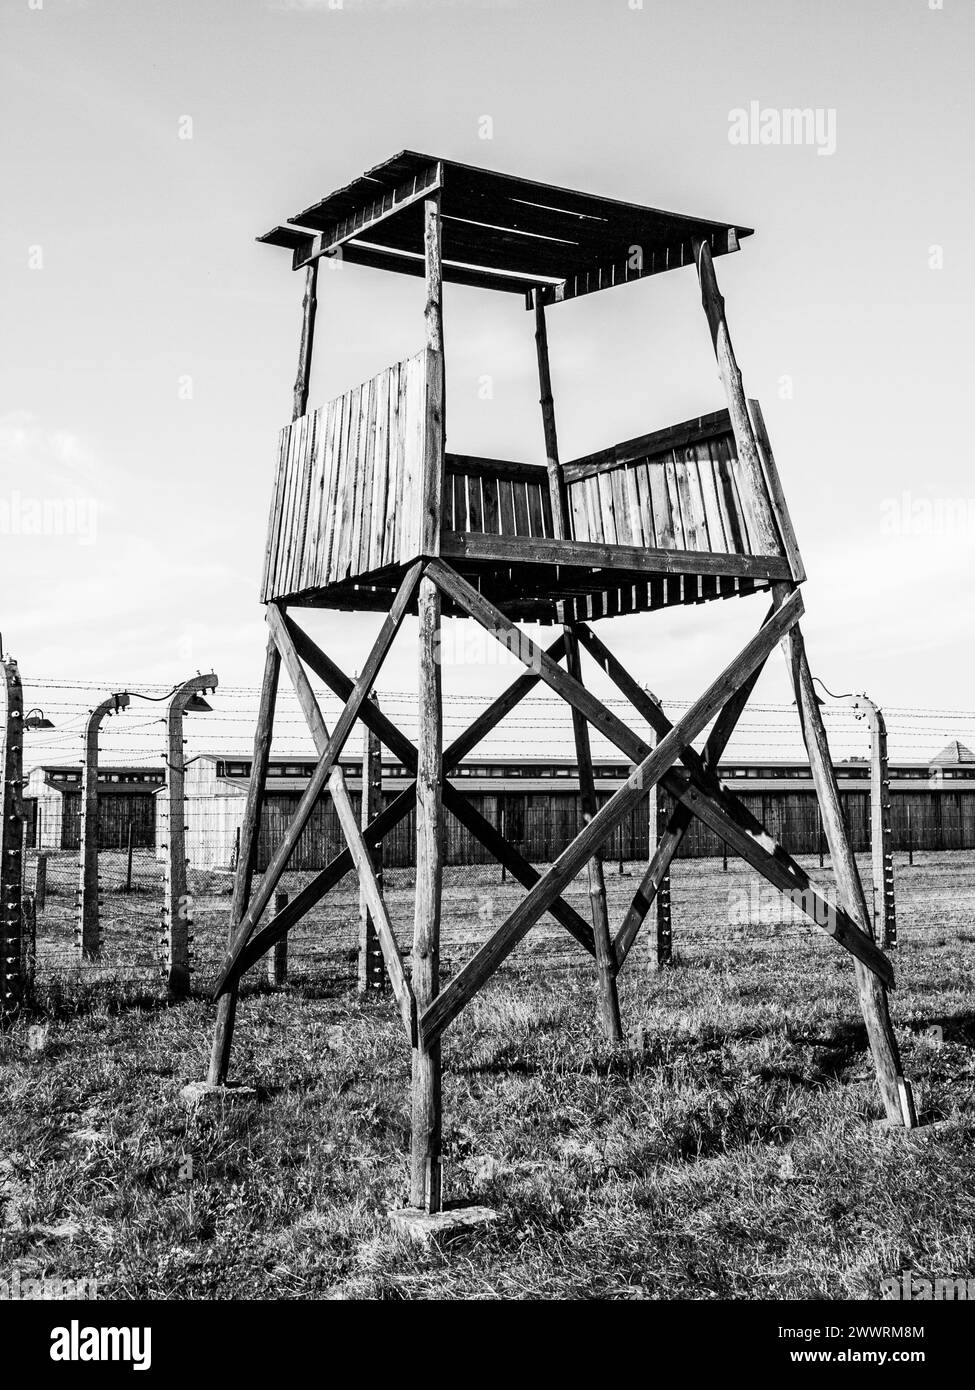 Old wooden watch tower in concentration camp Auschwitz - Birkenau, Oswiecim - Brzezinka, Poland, Europe. Black and white image. Stock Photo